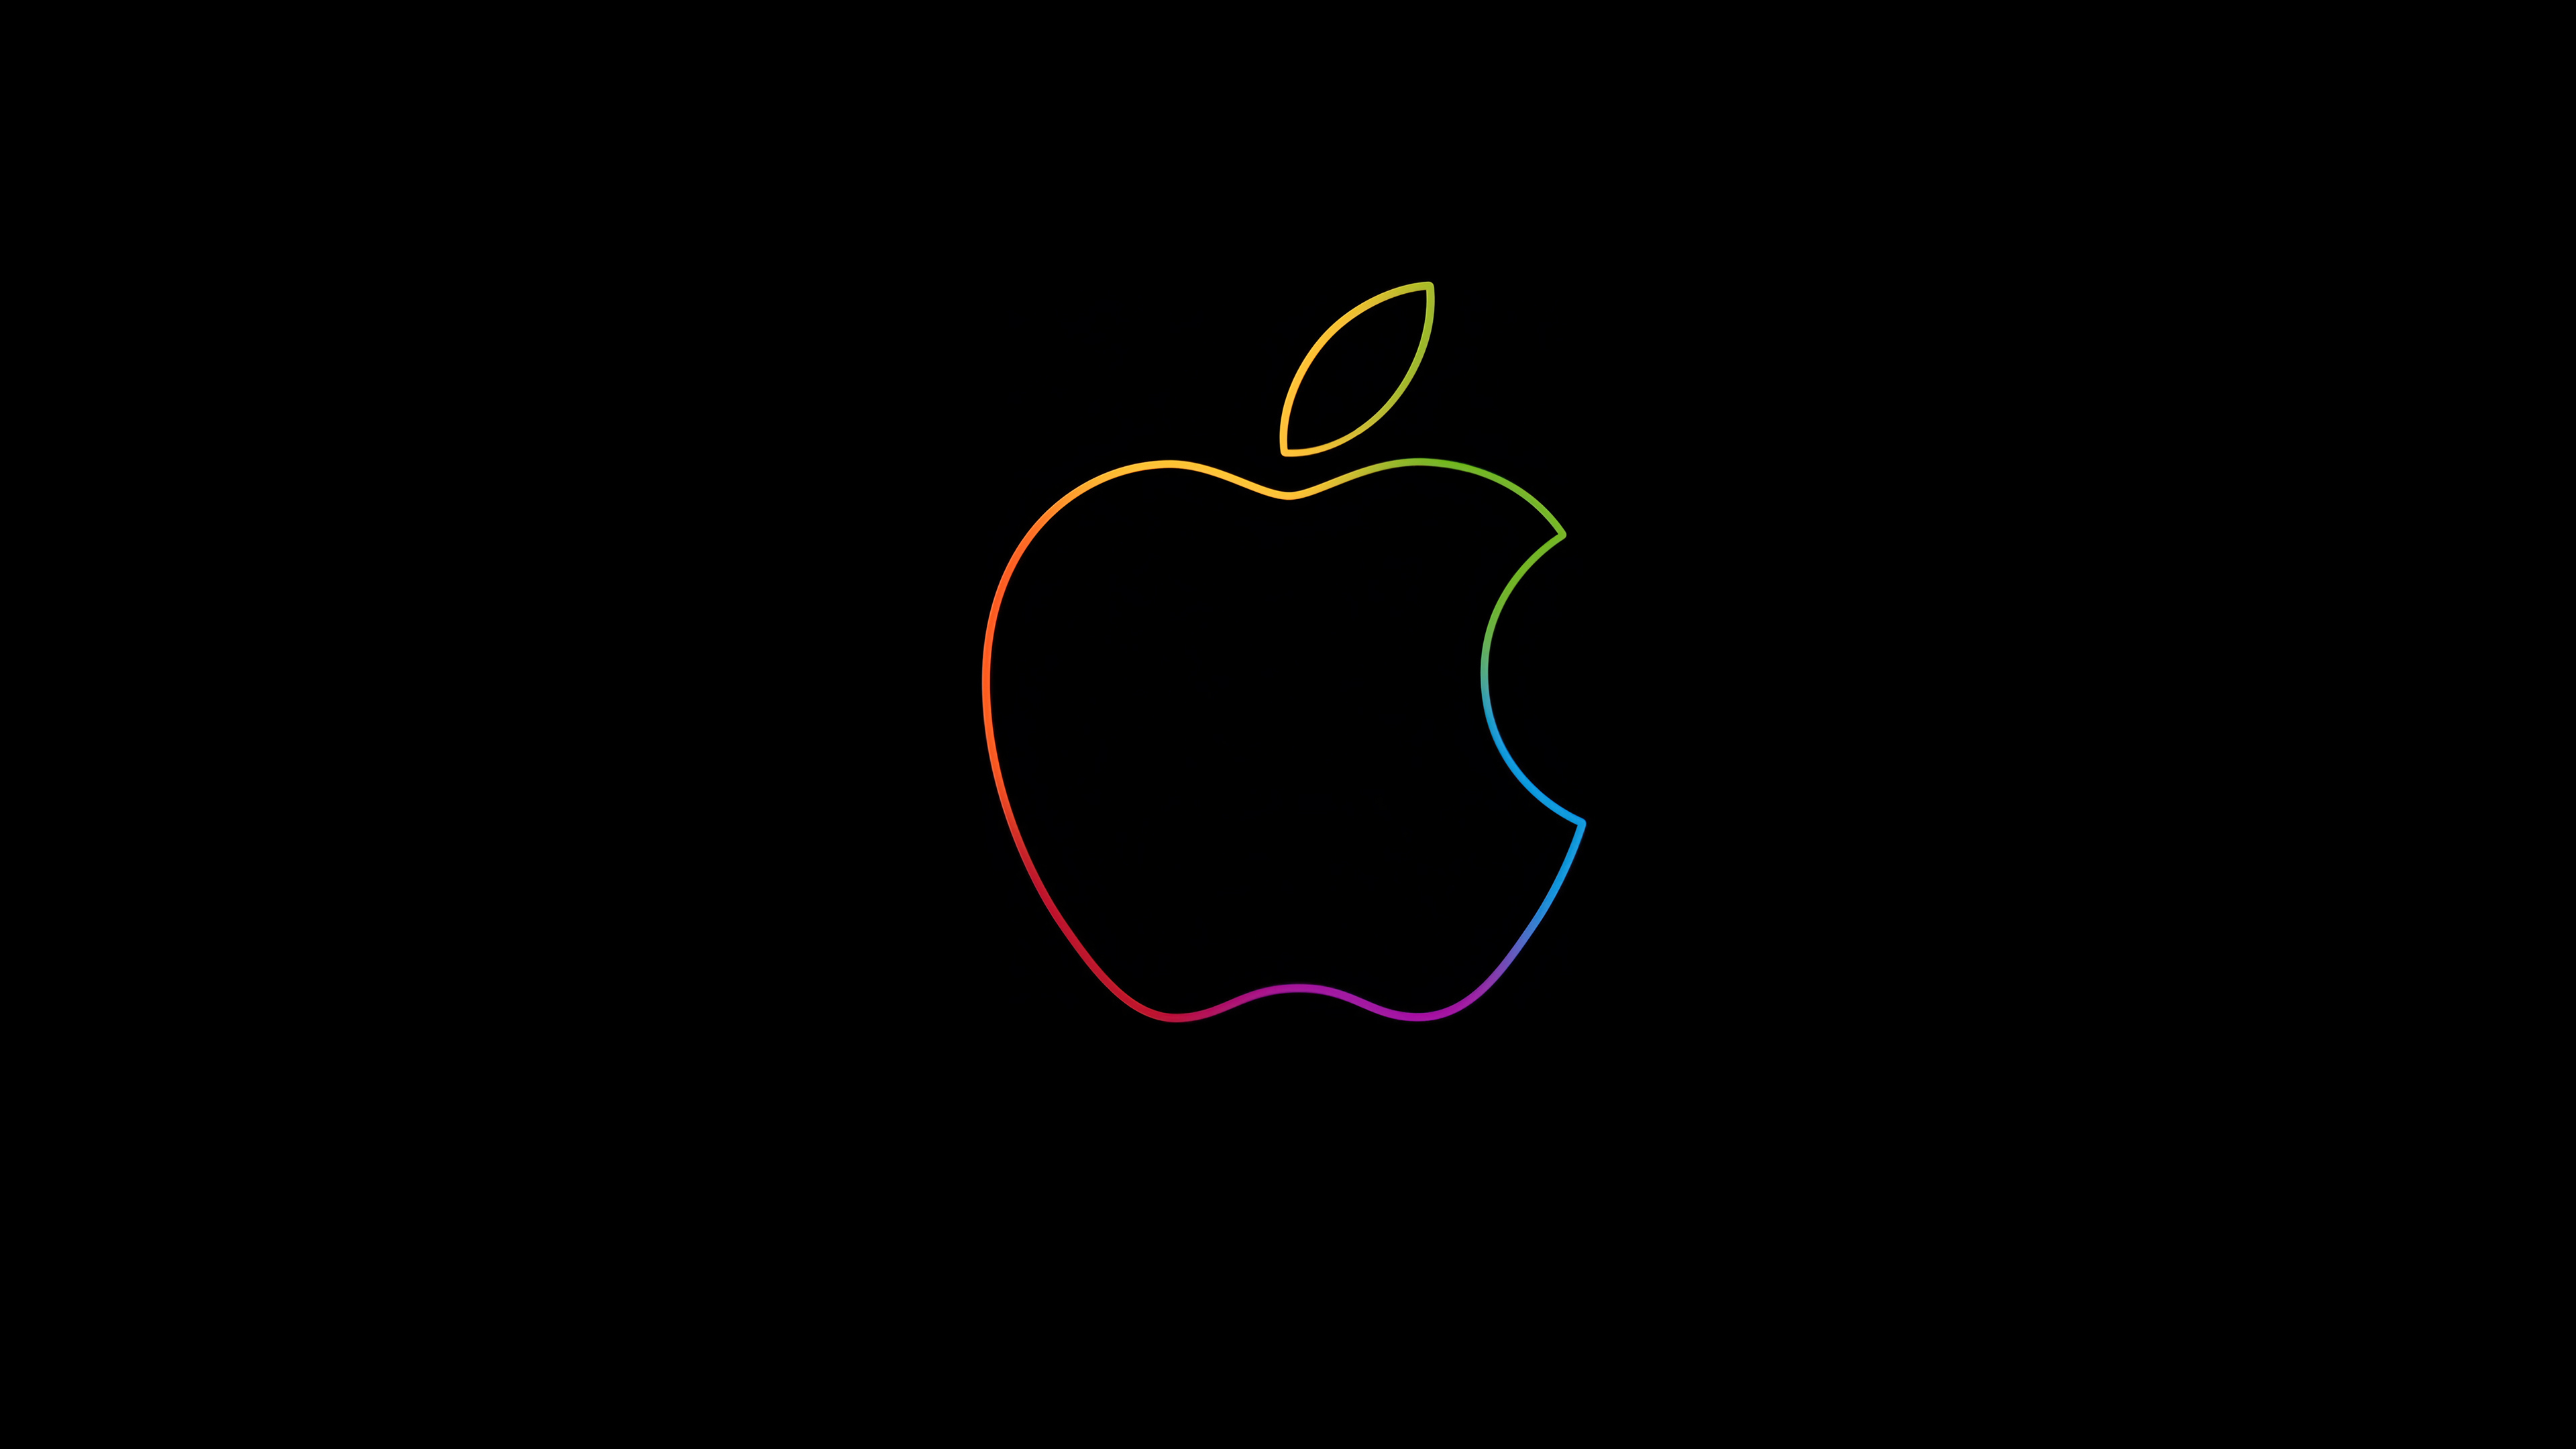 Apple 4k Neon Logo Wallpaper, HD Hi-Tech 4K Wallpapers, Images, Photos and  Background - Wallpapers Den